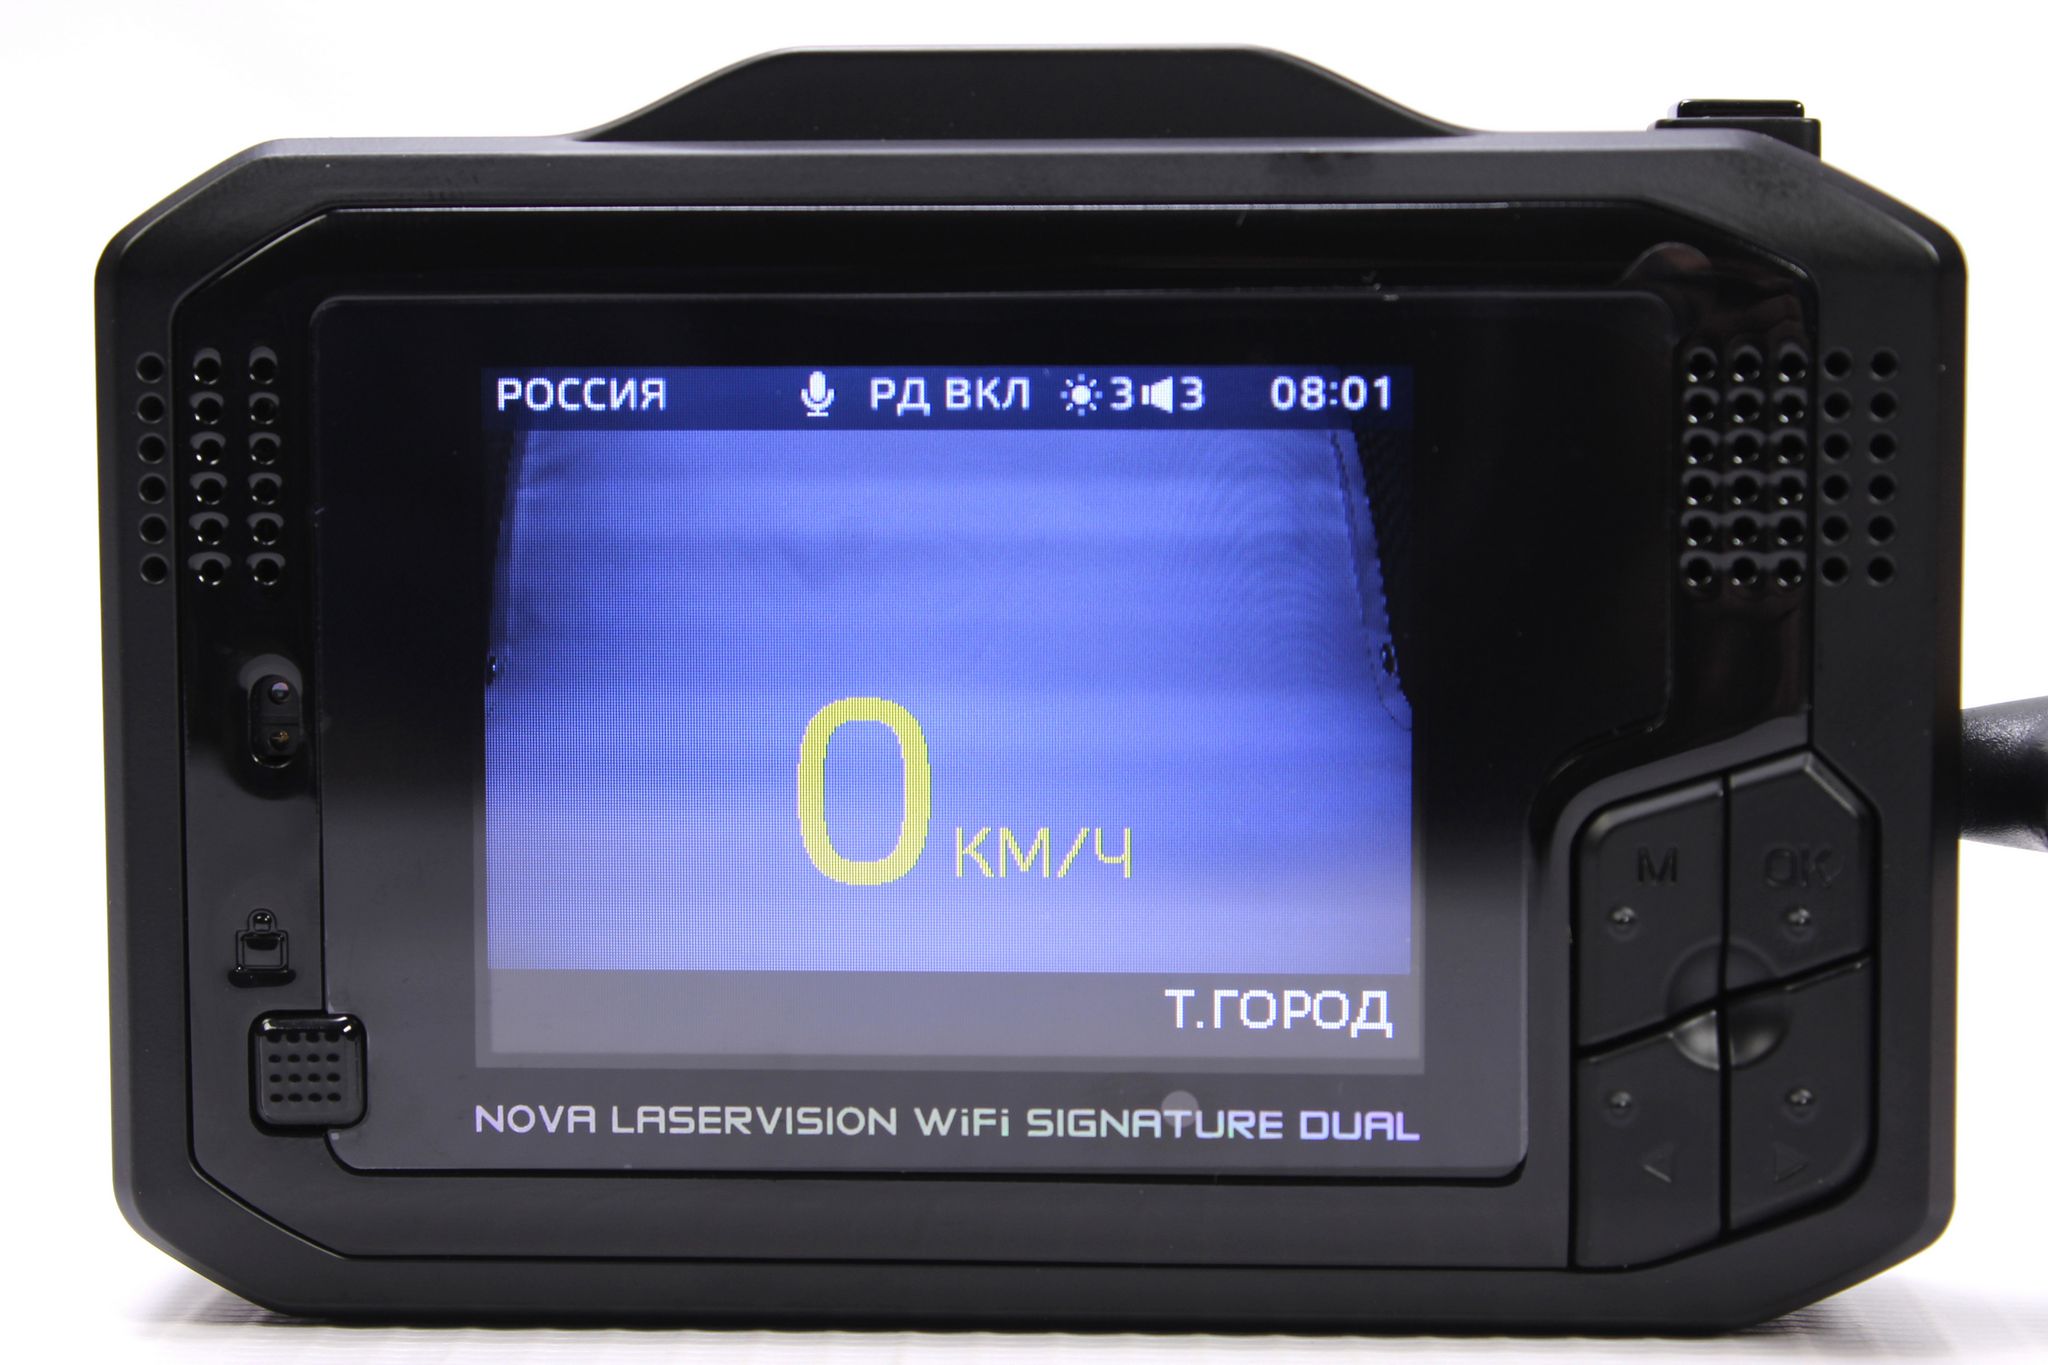 Ibox nova wifi signature. Видеорегистратор с радар-детектором IBOX EVO laservision WIFI Signature Dual. GPS навигатора с видеорегистратором Coyote 940 DVR Double.... ЖЛС навигатор видеорегистратором 9 дюймов. Комбоустройства для авто Eplutus Signature.